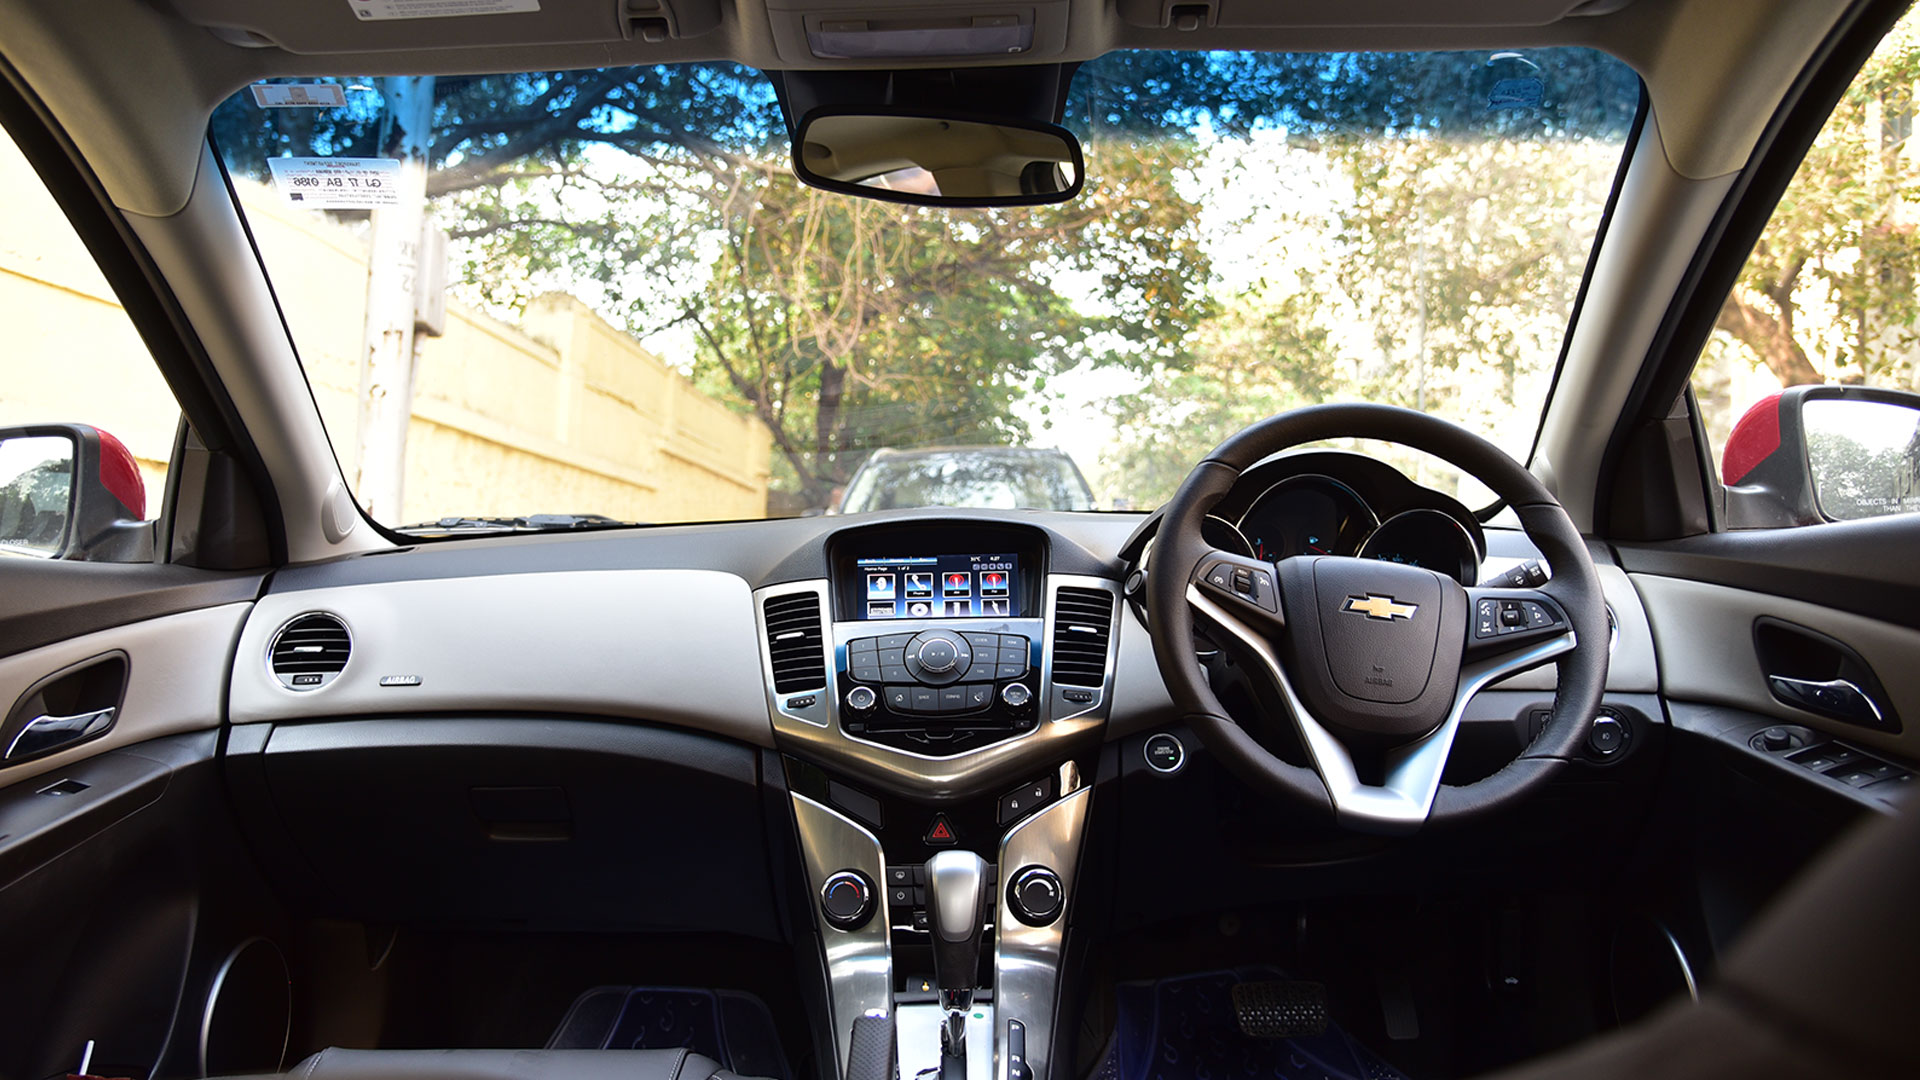 Chevrolet Cruze 2016 Ltz Interior Car Photos Overdrive